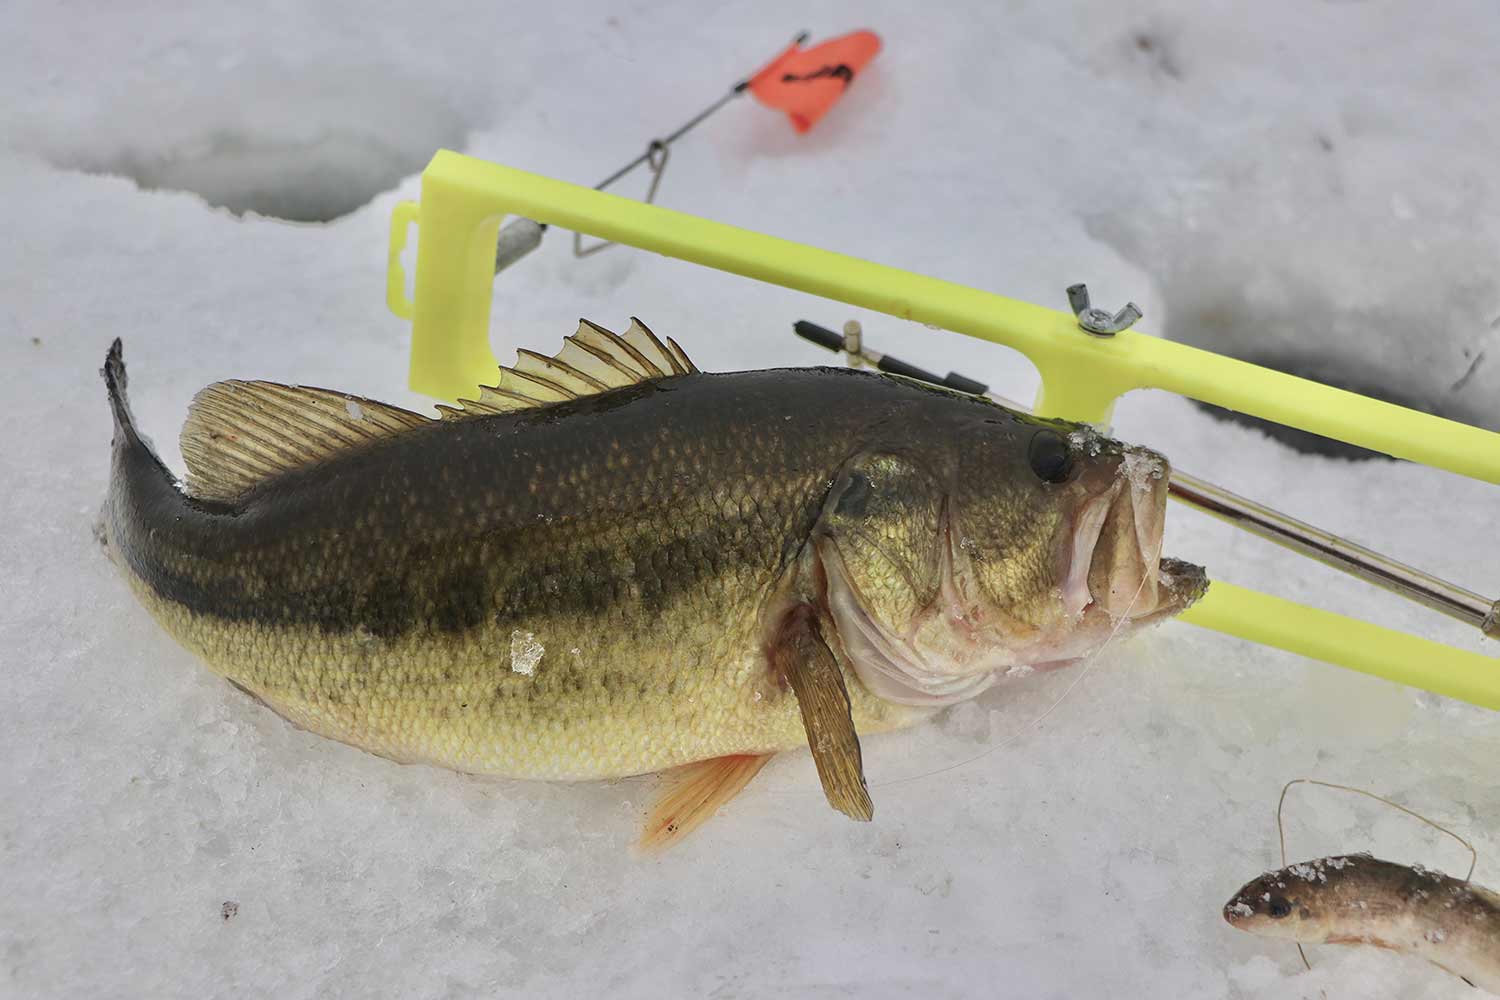 A Largemouth bass caught on tip ups